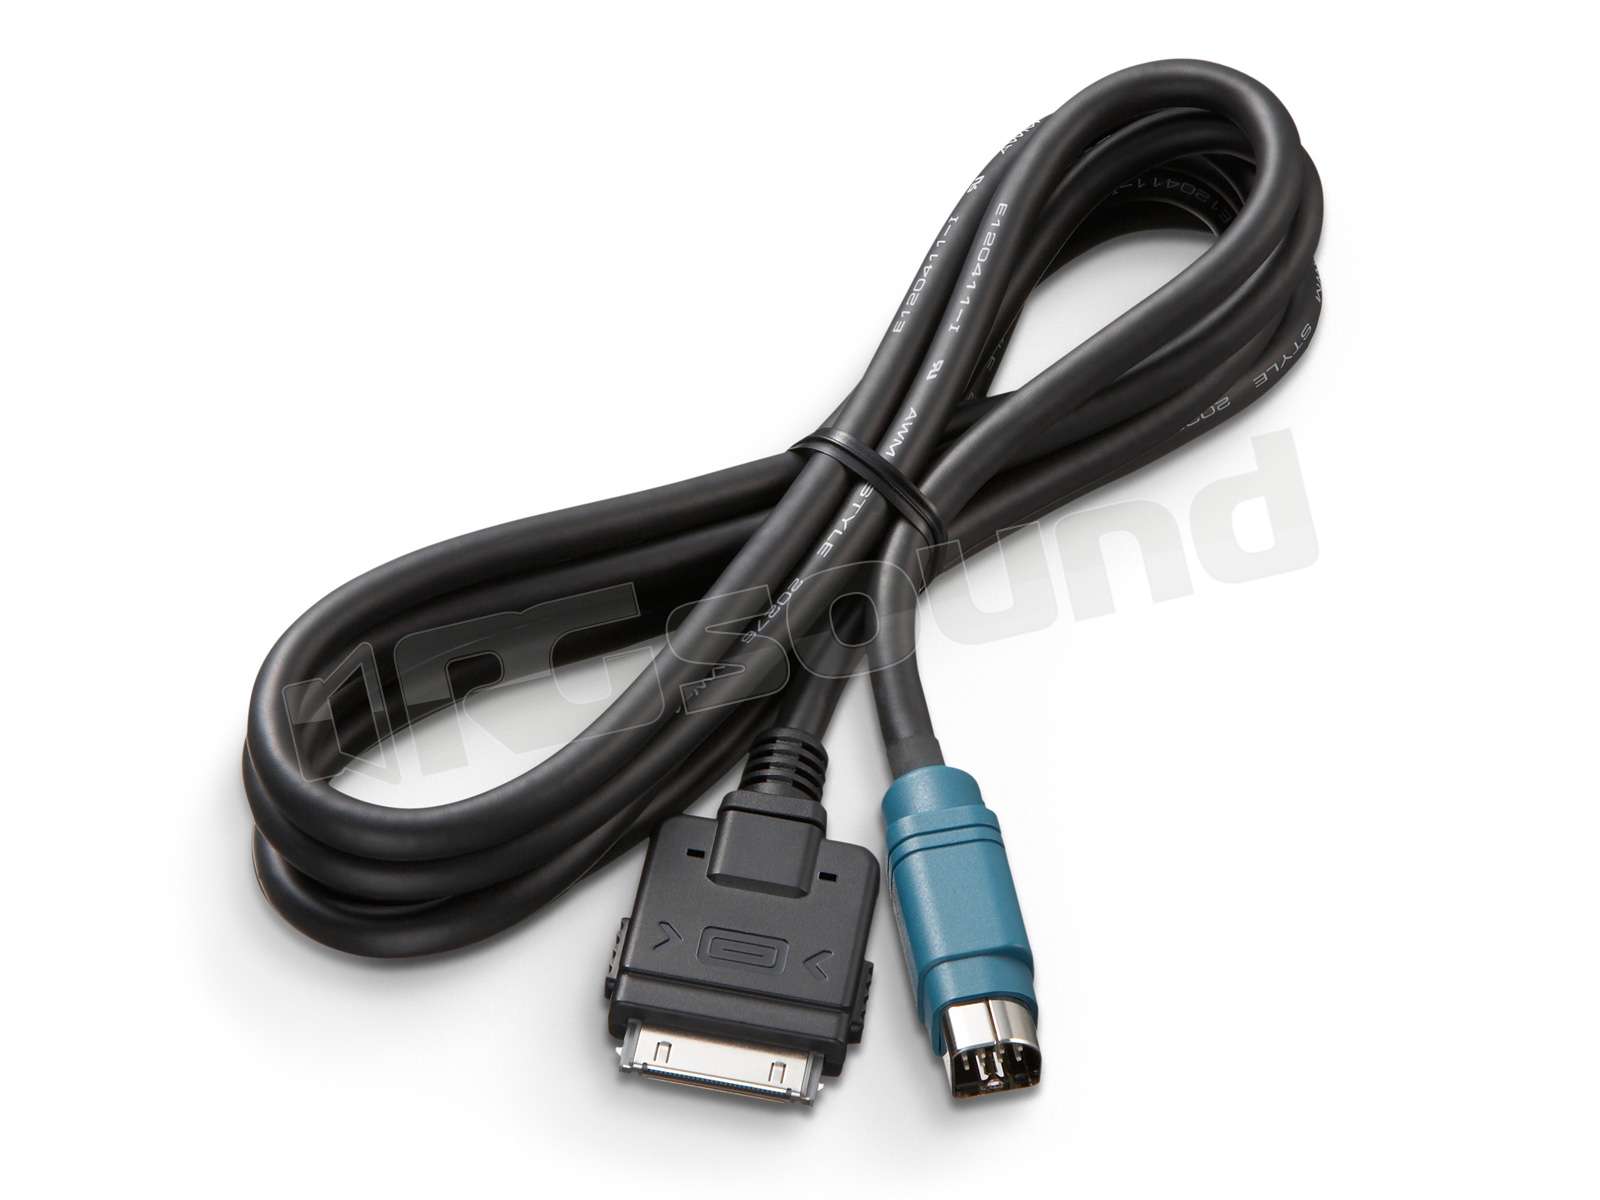 KIMISS Adattatore Bluetooth per auto Cavo per ricevitore musicale USB Connettore da 3,5 mm per Alpine JVC e tutti i dispositivi Unilink